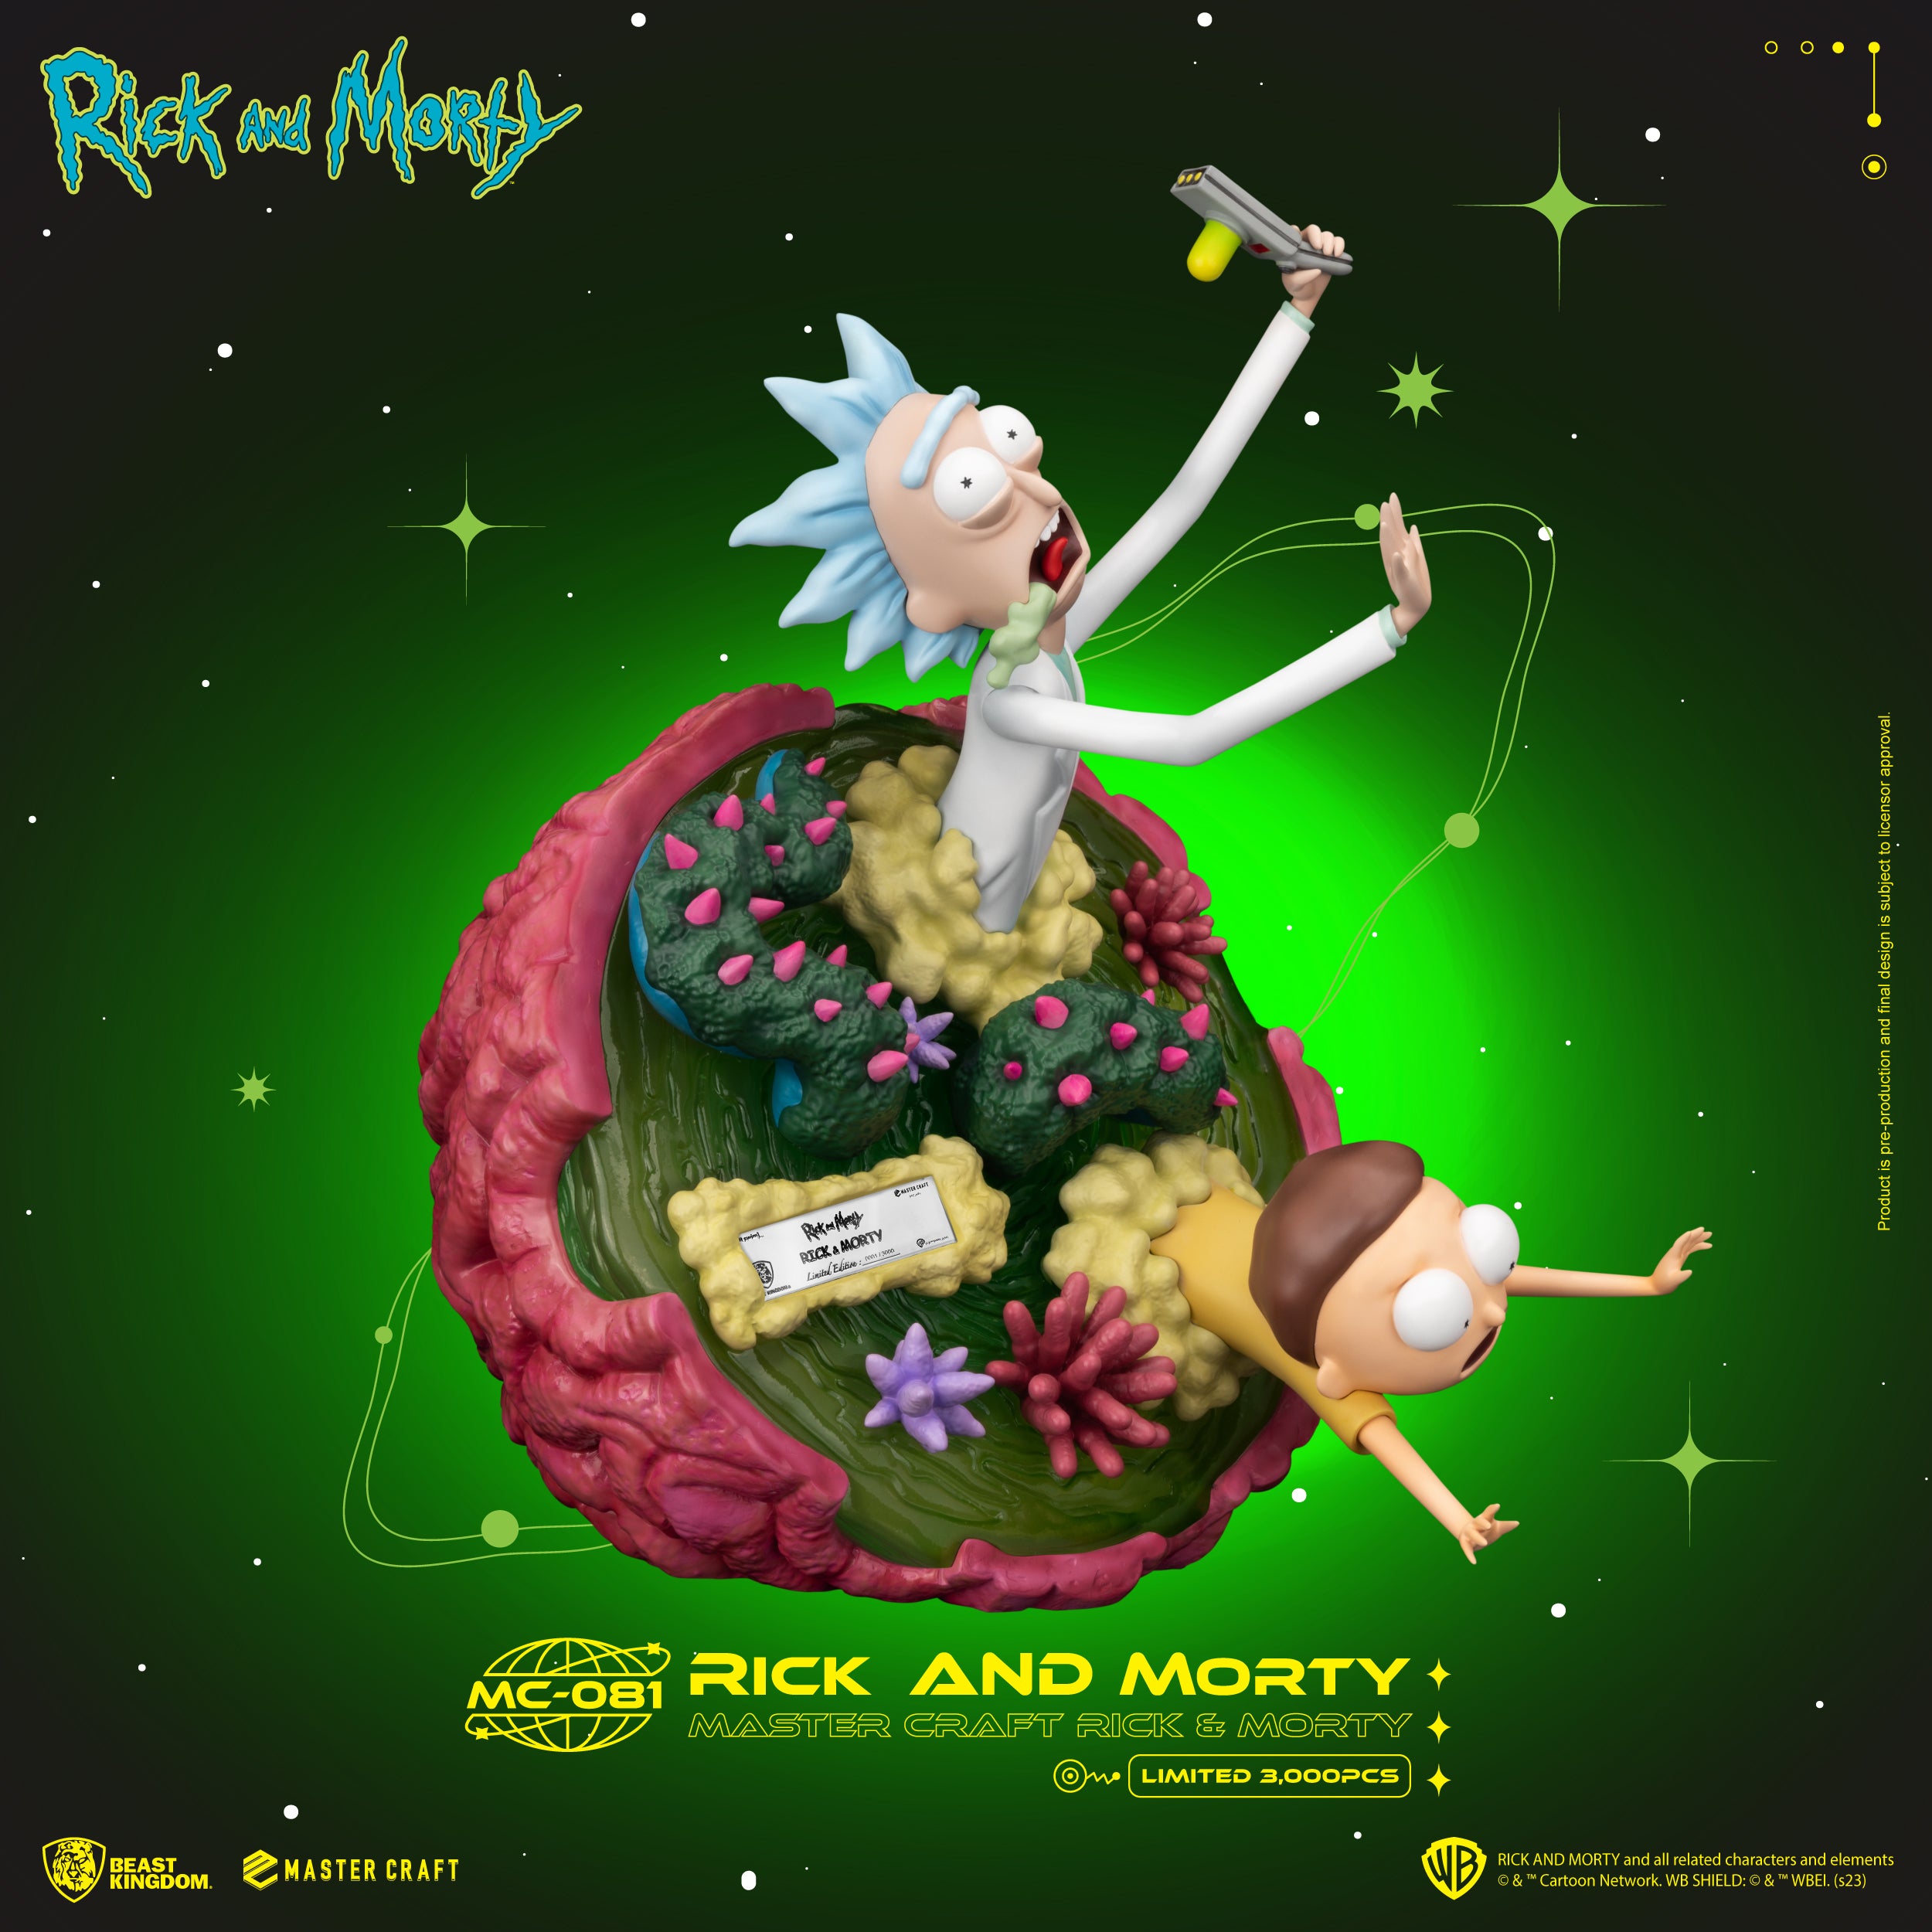 Beast Kingdom MC-081 Rick and Morty Master Craft Rick & Morty